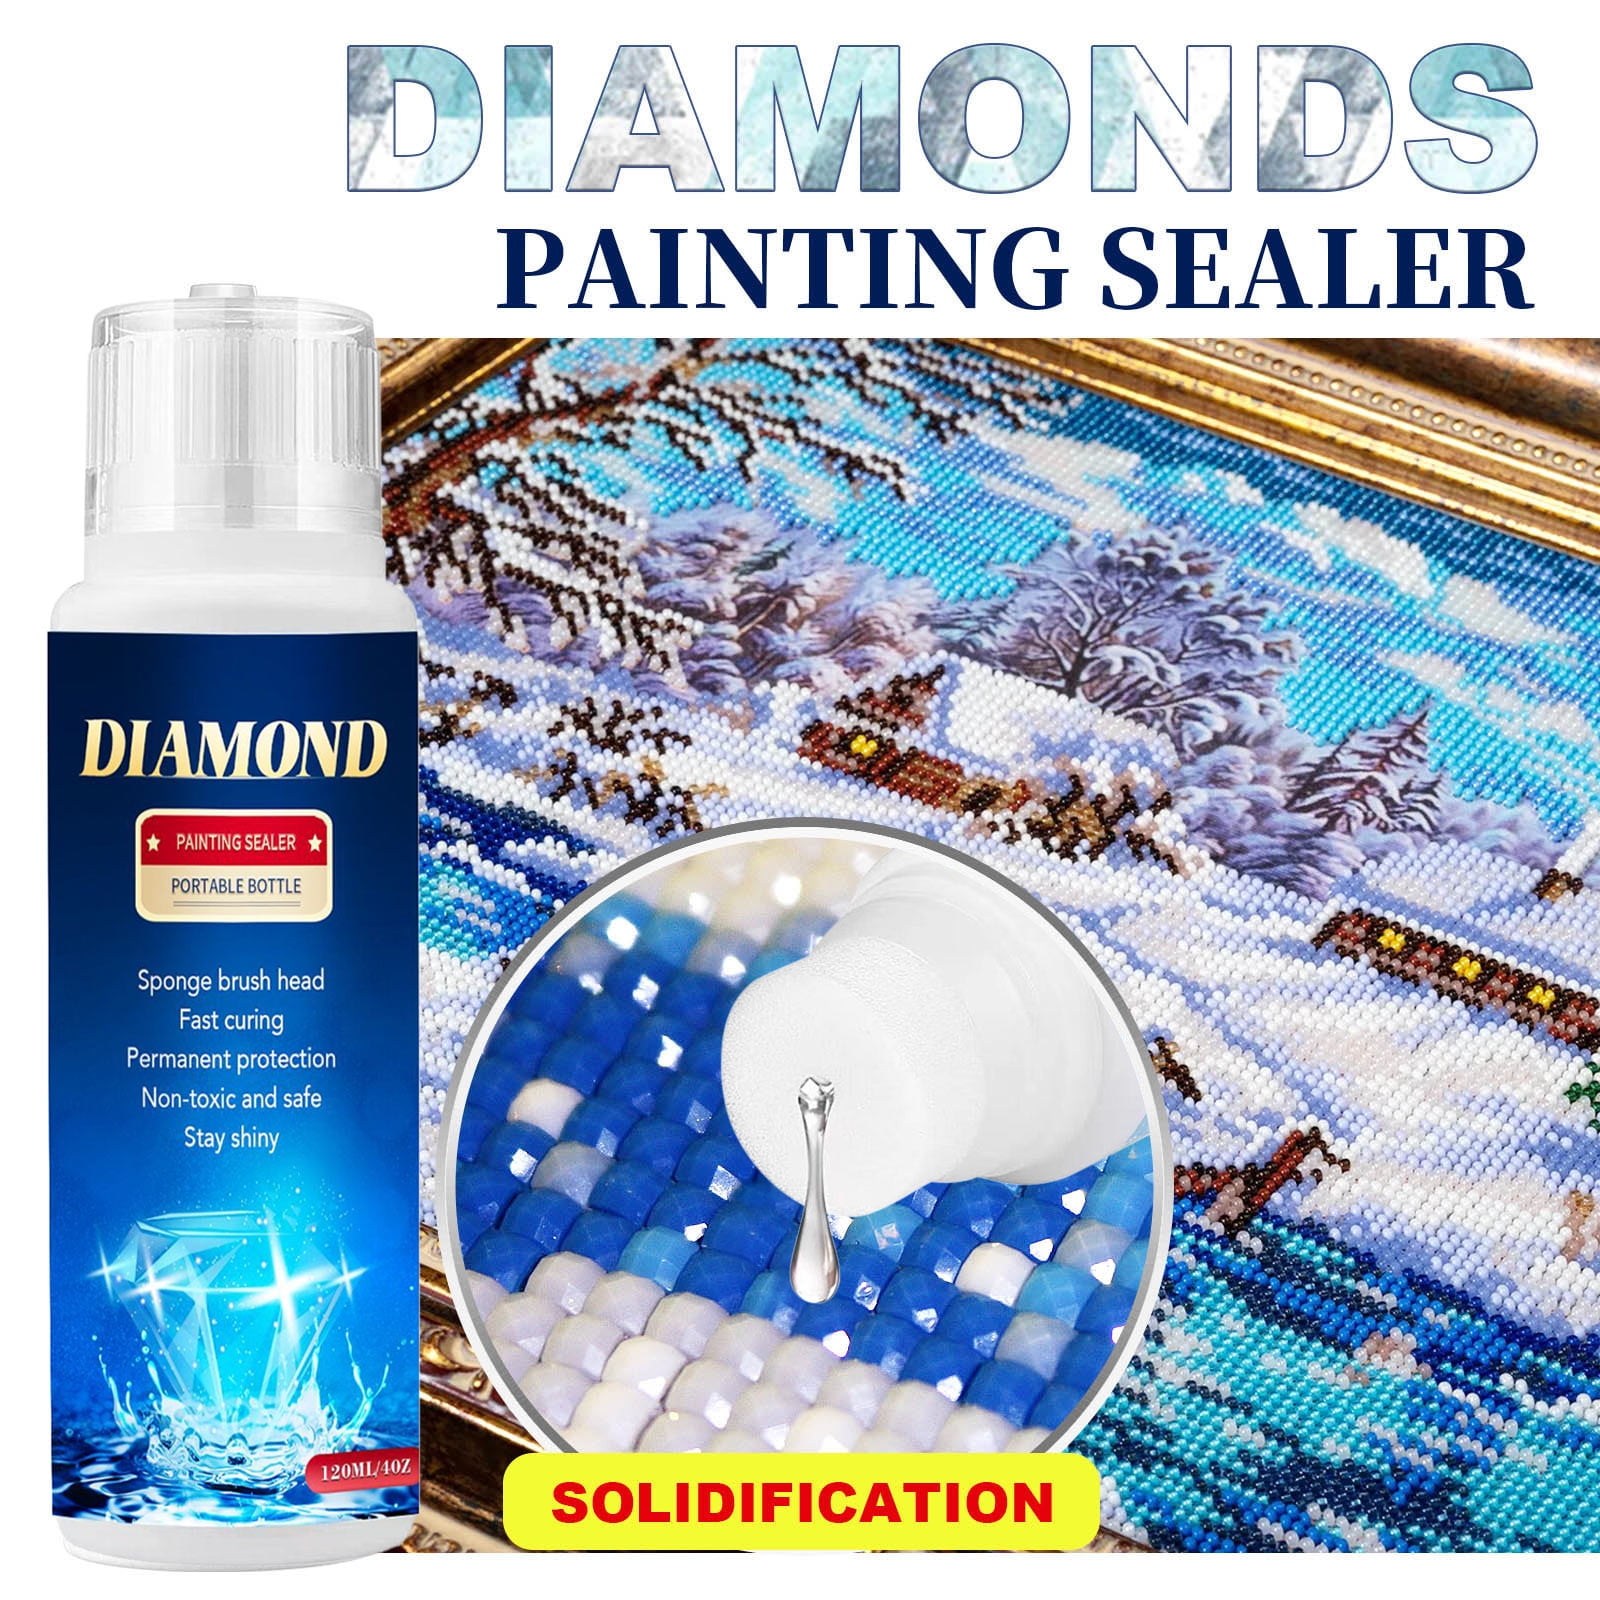 WQQZJJ Cleaning Supplies Diamond Art Painting Sealer 1 Pack 120ML